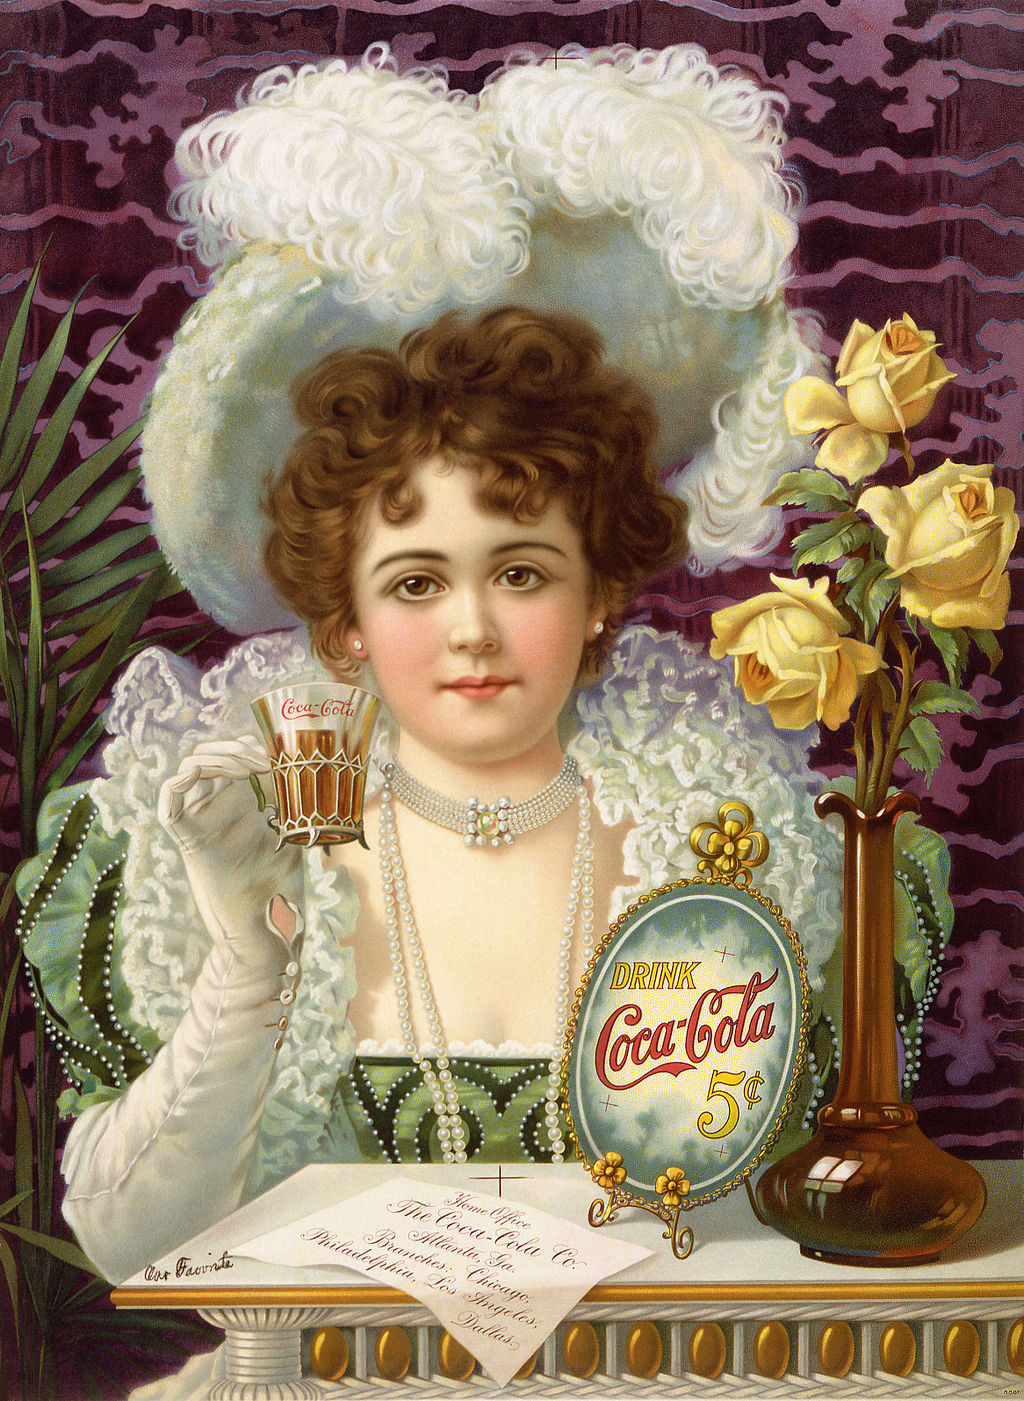 Artist not credited.derivative work (restoration): Victorrocha (talk)Cocacola-5cents-1900.jpg: ', Public domain, via Wikimedia Commons